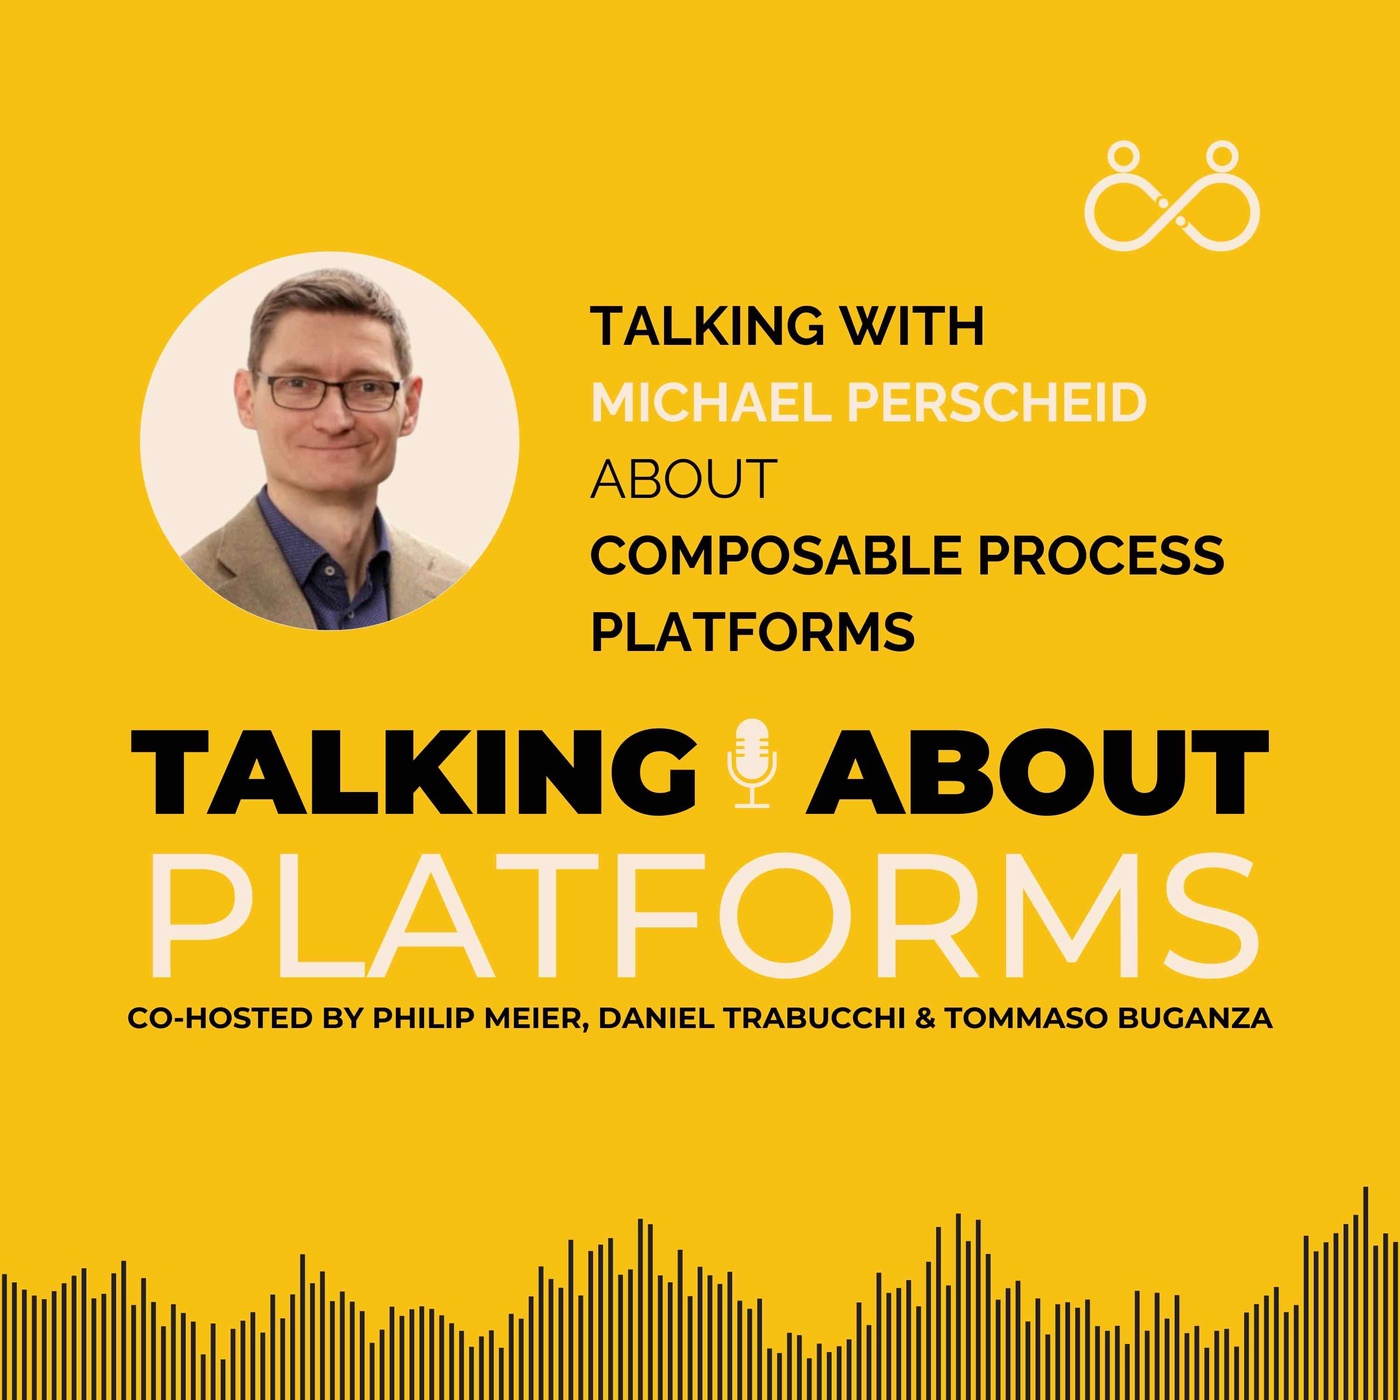 Composable process platforms with Michael Perscheid